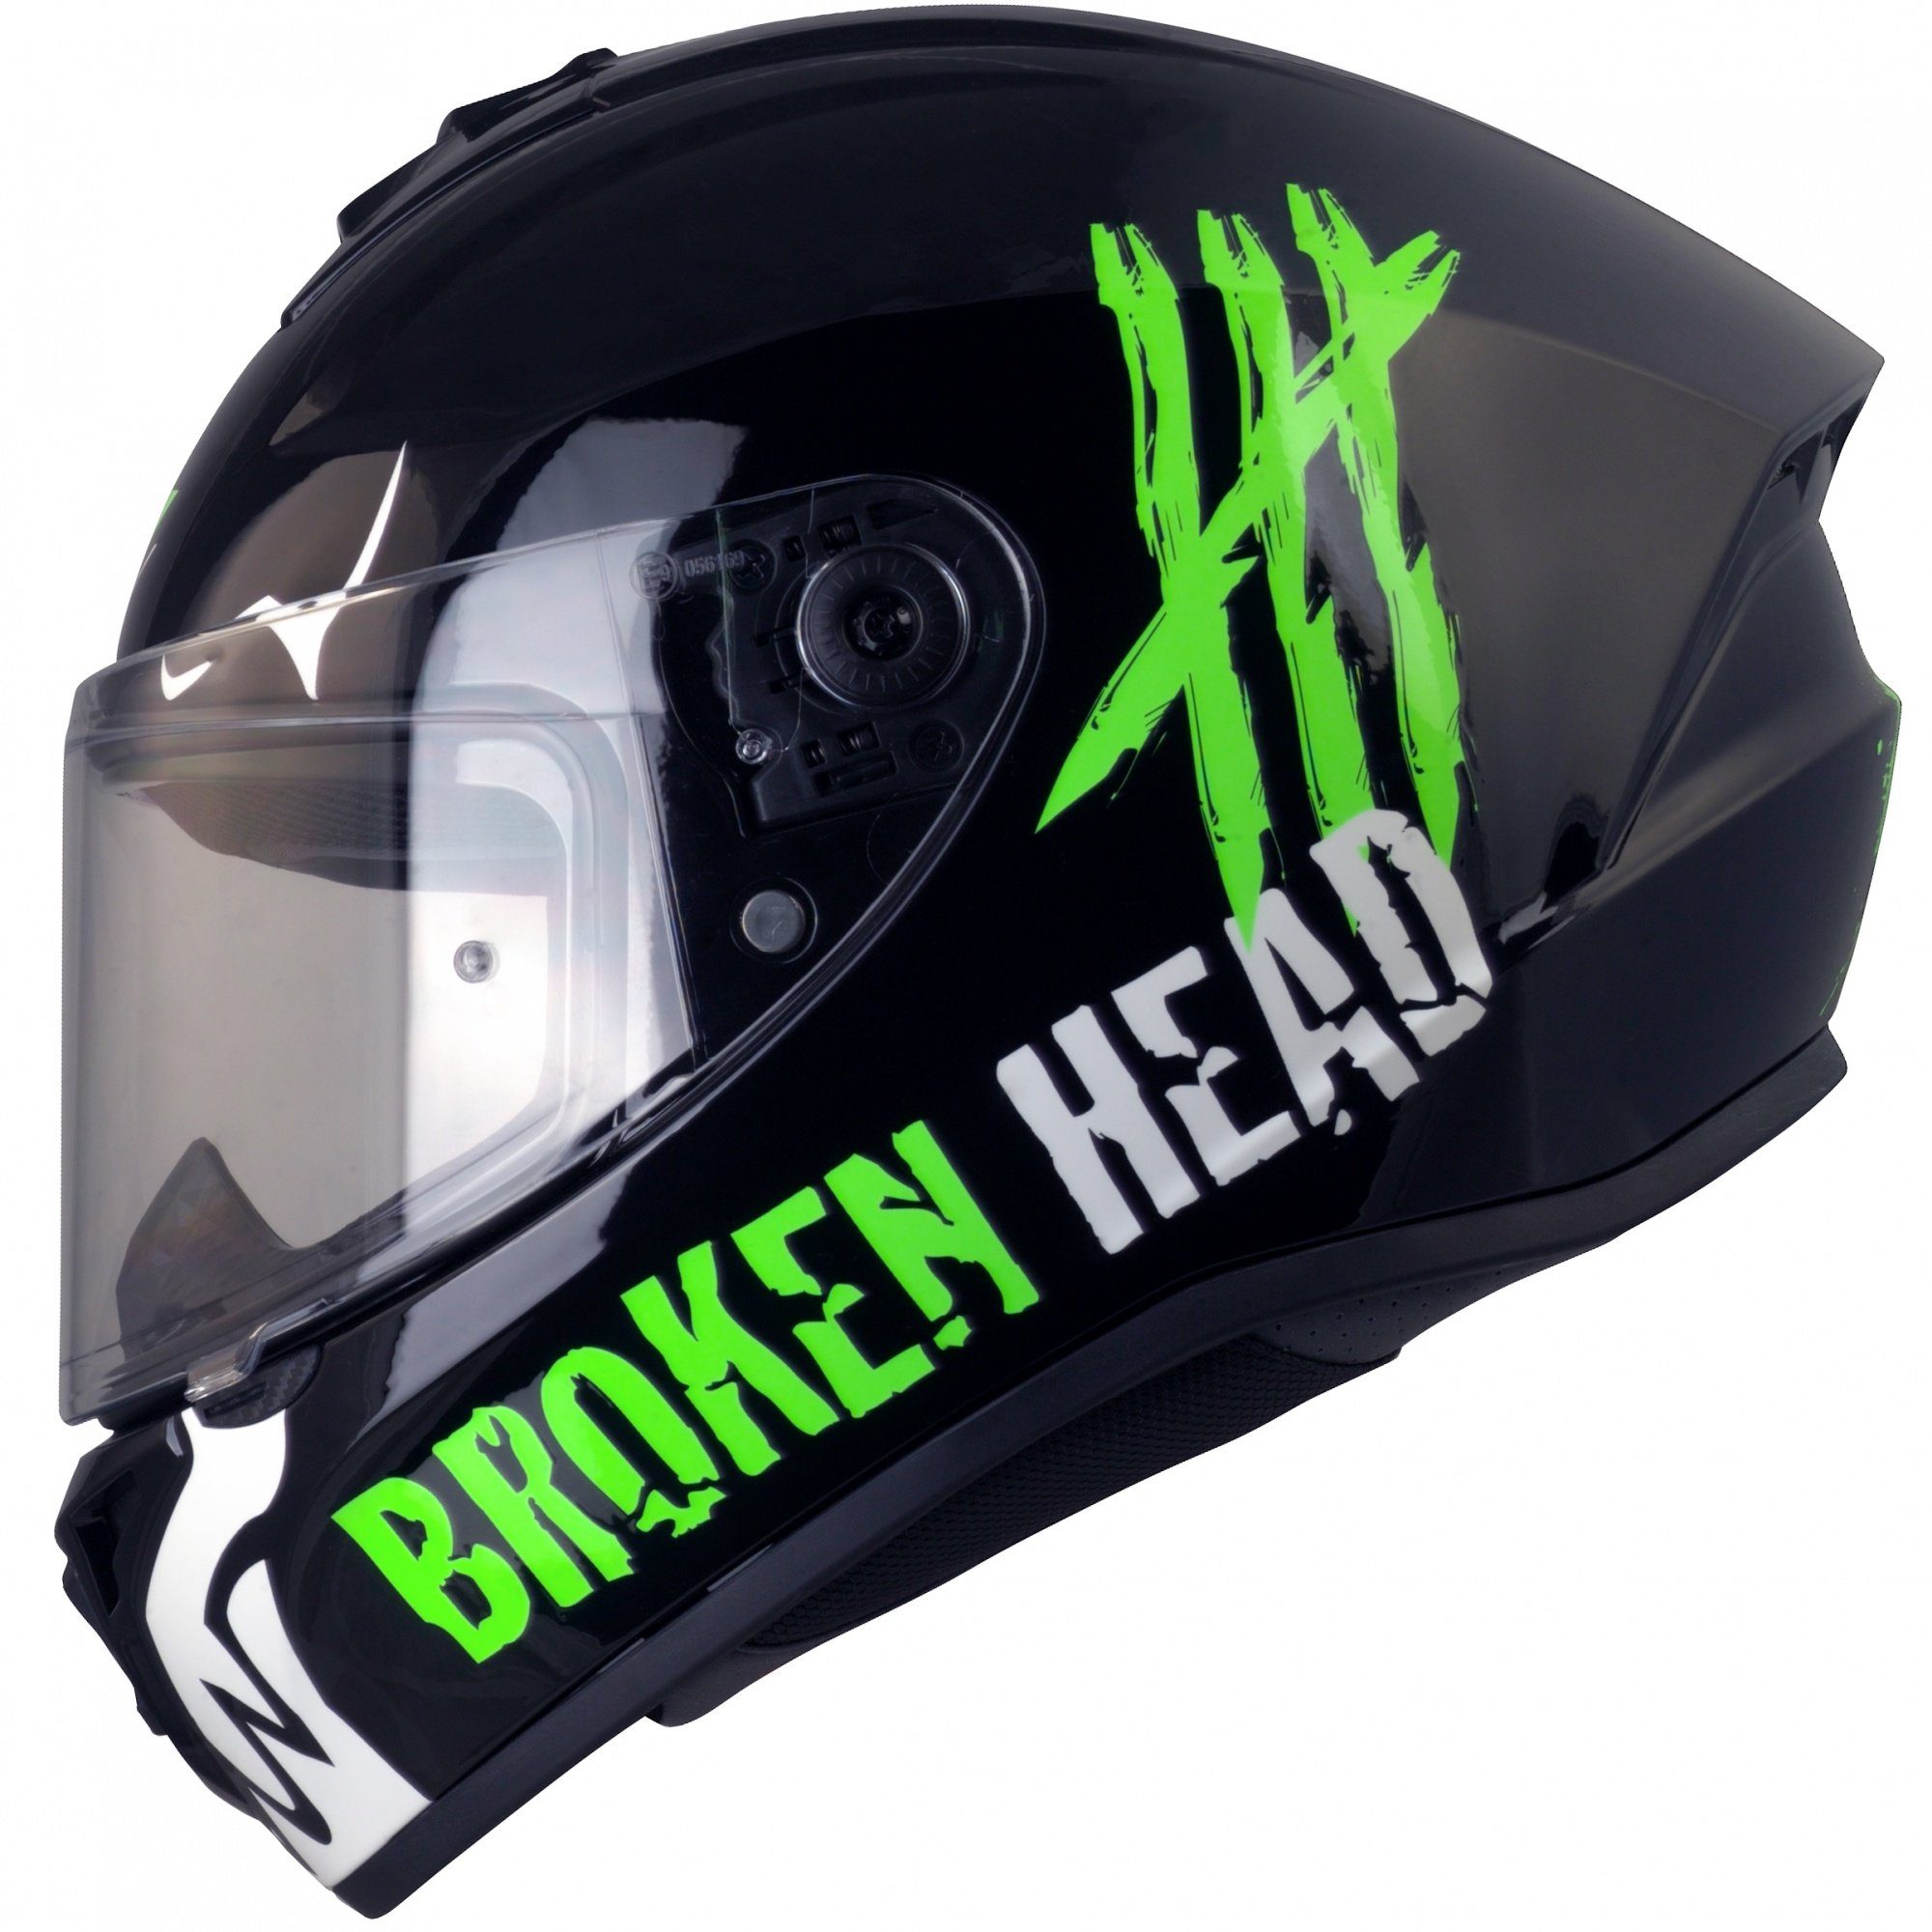 Broken Head Motorradhelm Broken Head Adrenalin Therapy 4X Schwarz-Neon-Grün Glanz, Limited Edition, Optik für Adrenalin-Junkies!